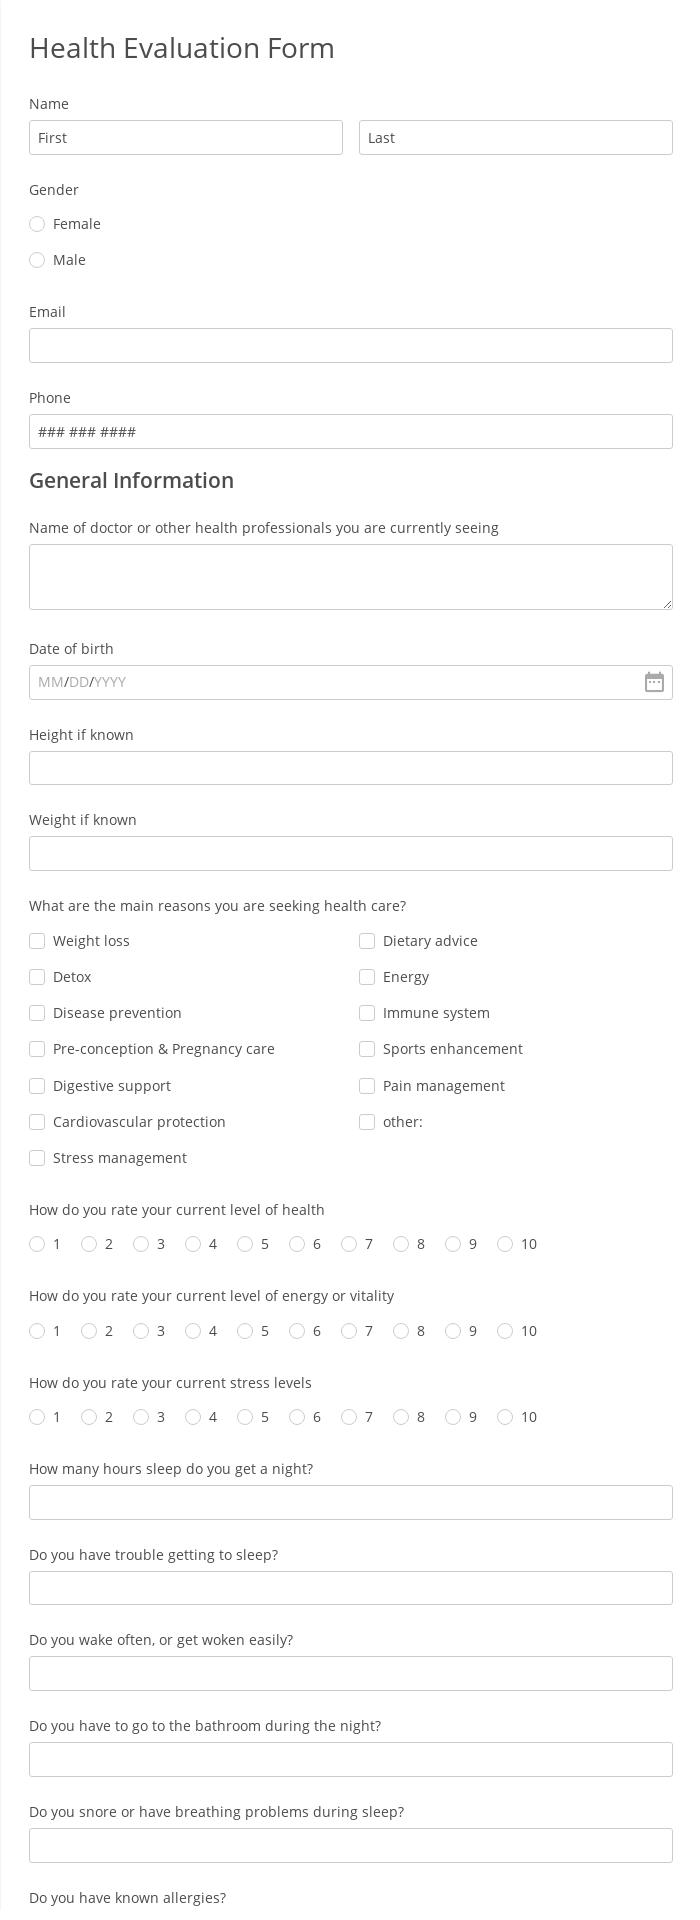 Health Evaluation Form